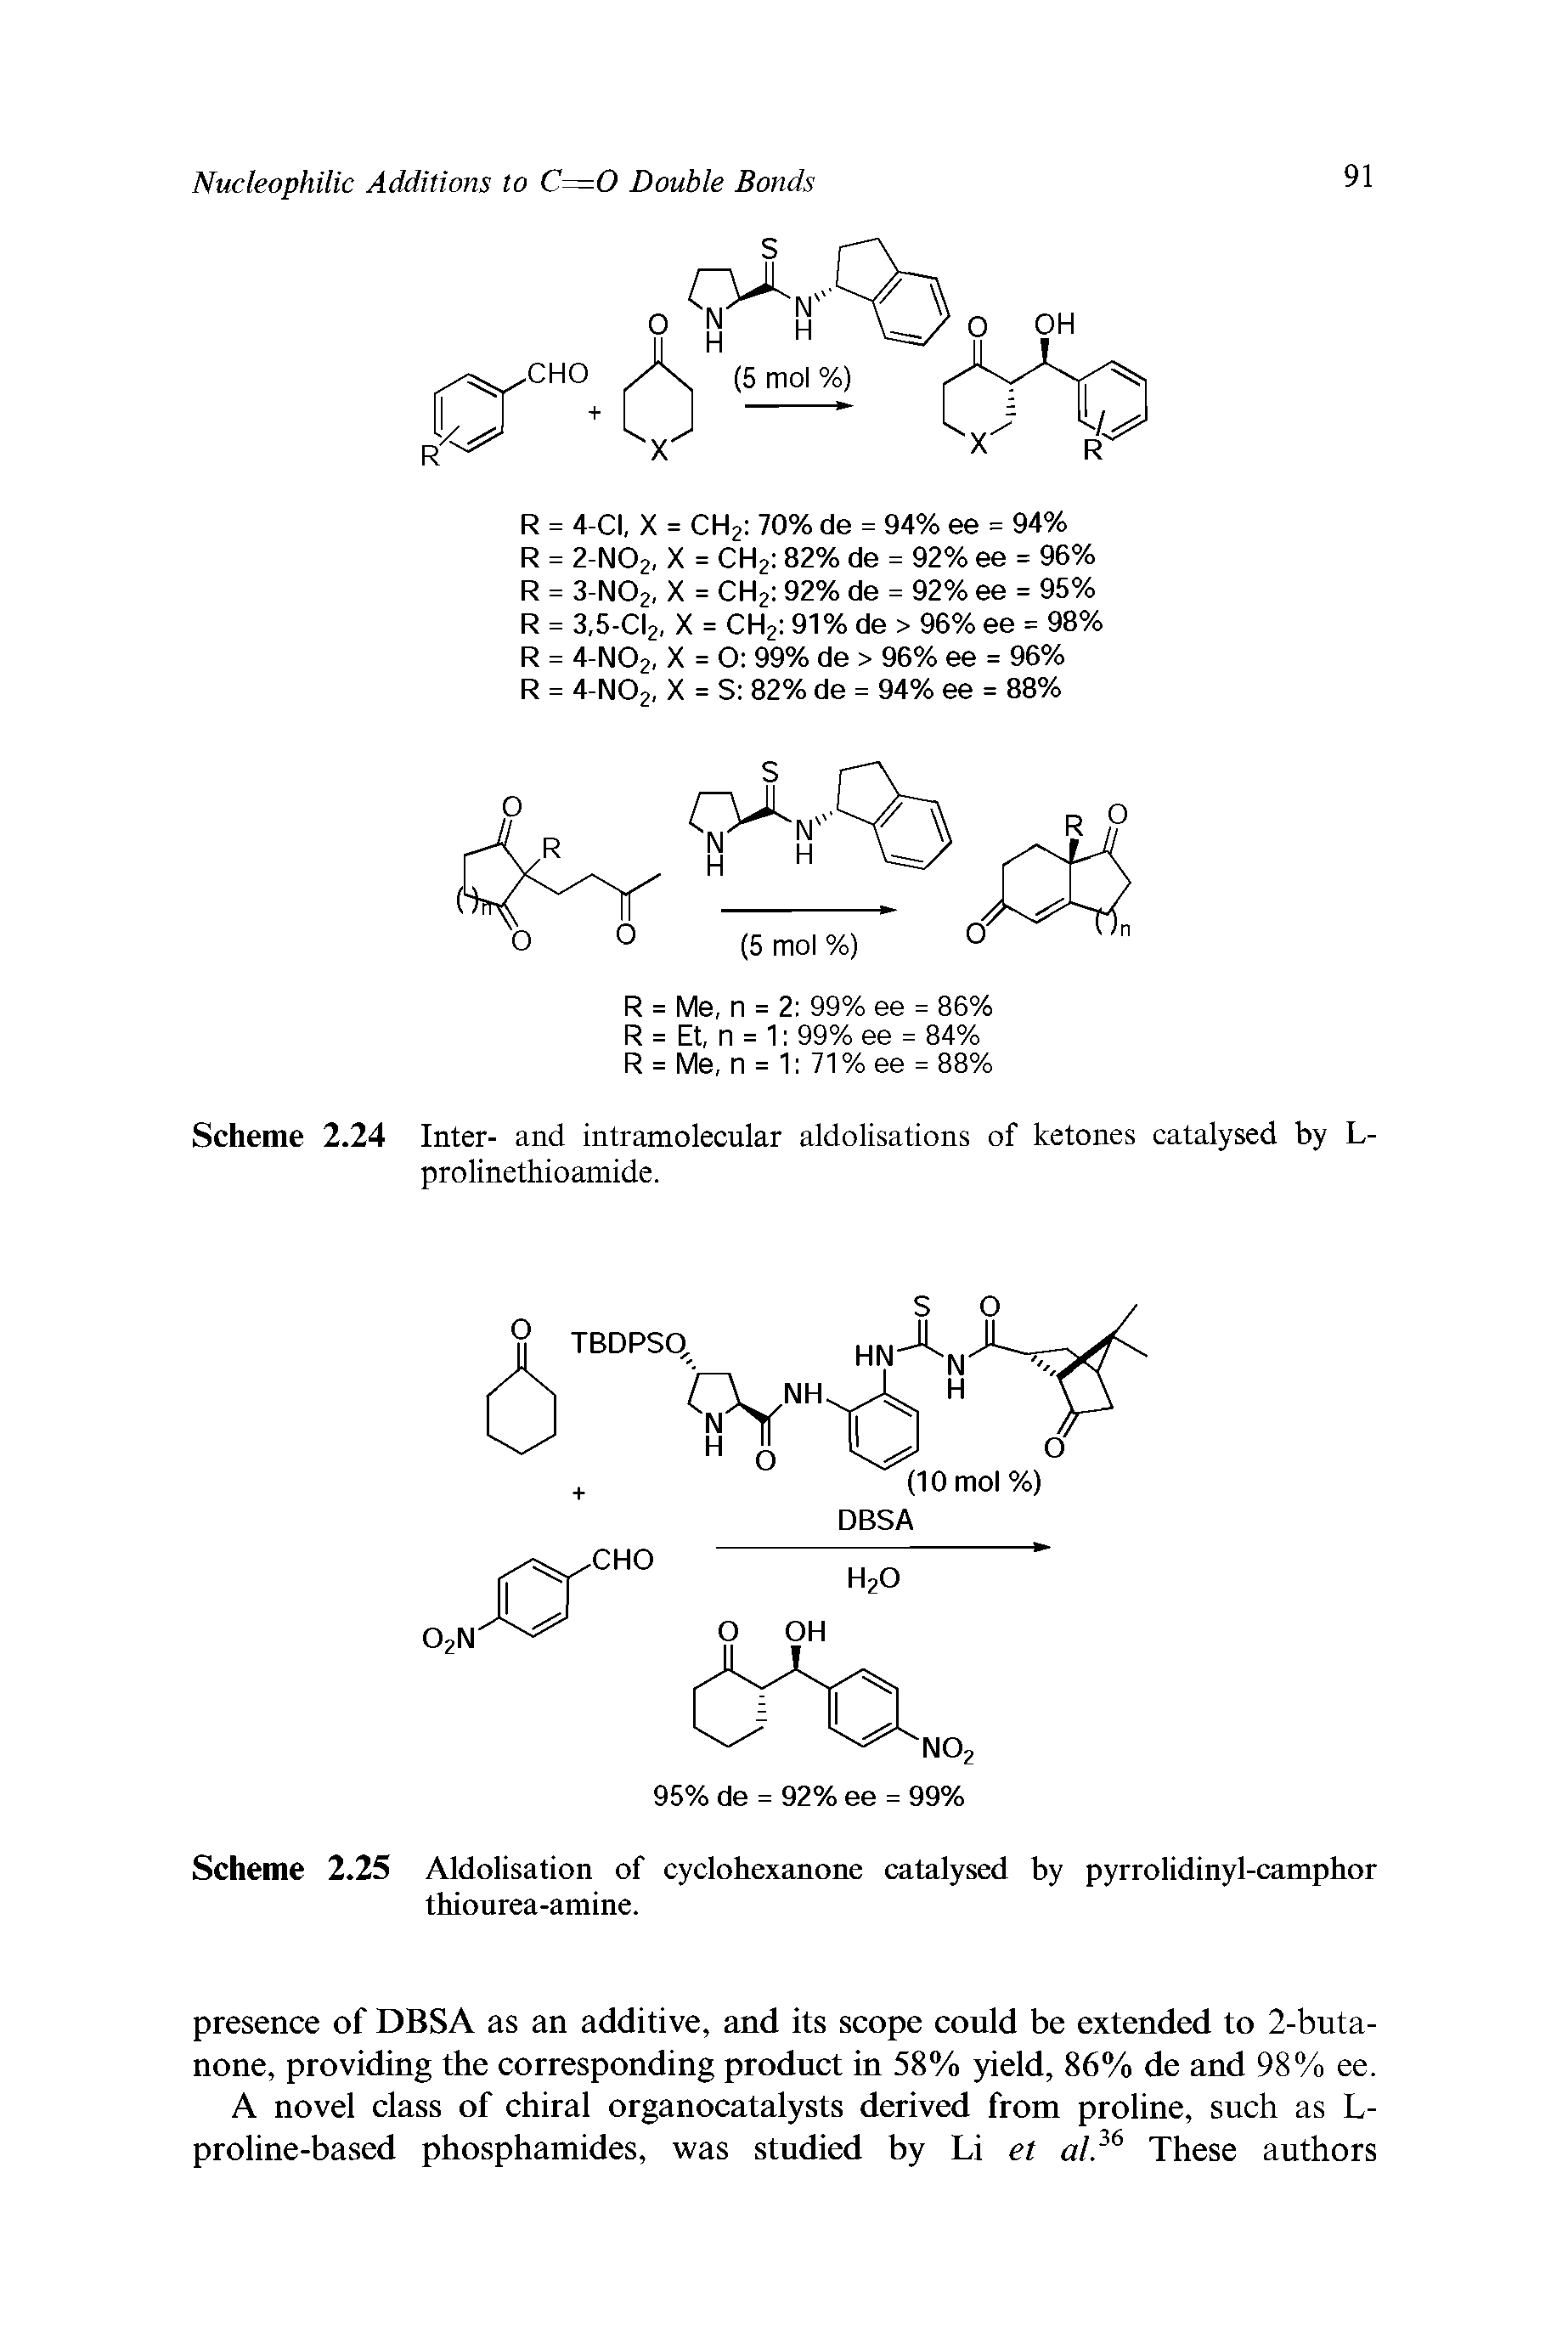 Scheme 2.25 TUdolisation of cyclohexanone catalysed by pyrrolidinyl-camphor thiourea-amine.